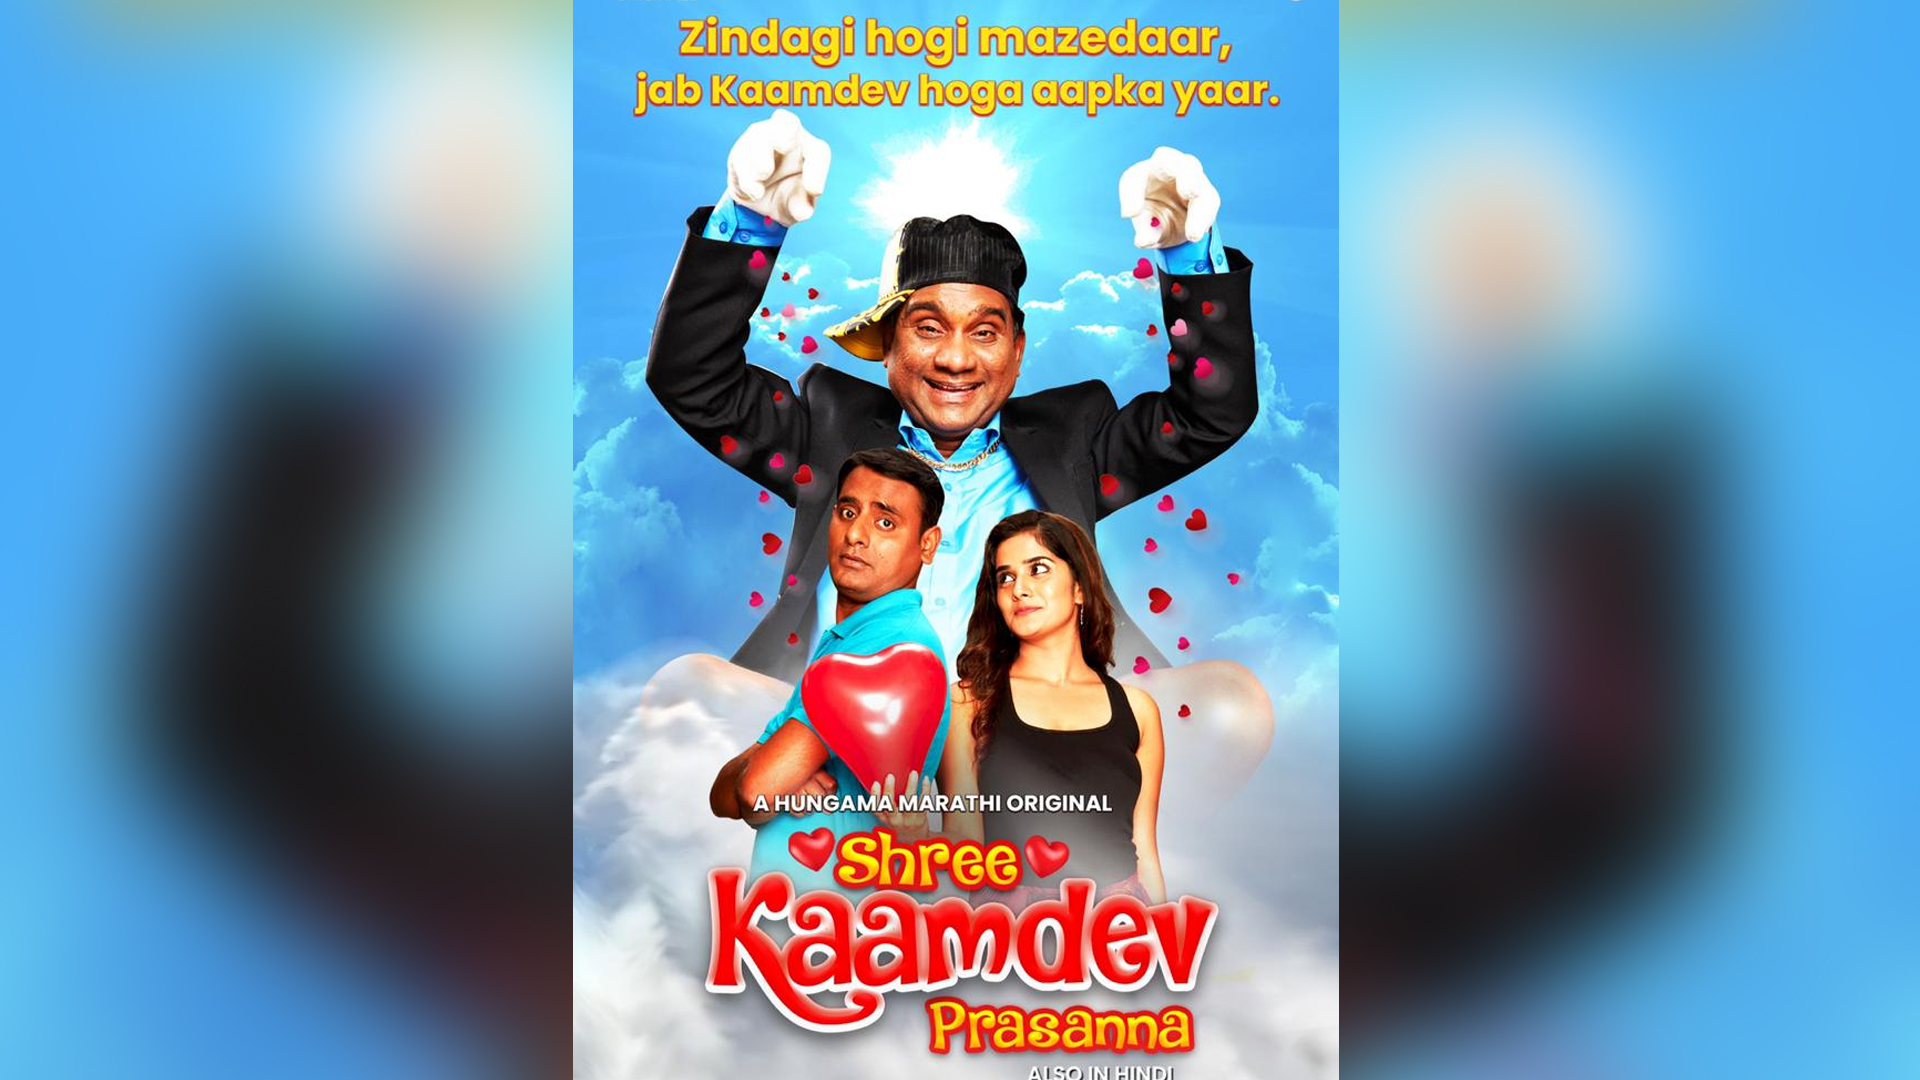 Hungama launches Shree Kaamdev Prasanna, a new Marathi original show, on Hungama Play